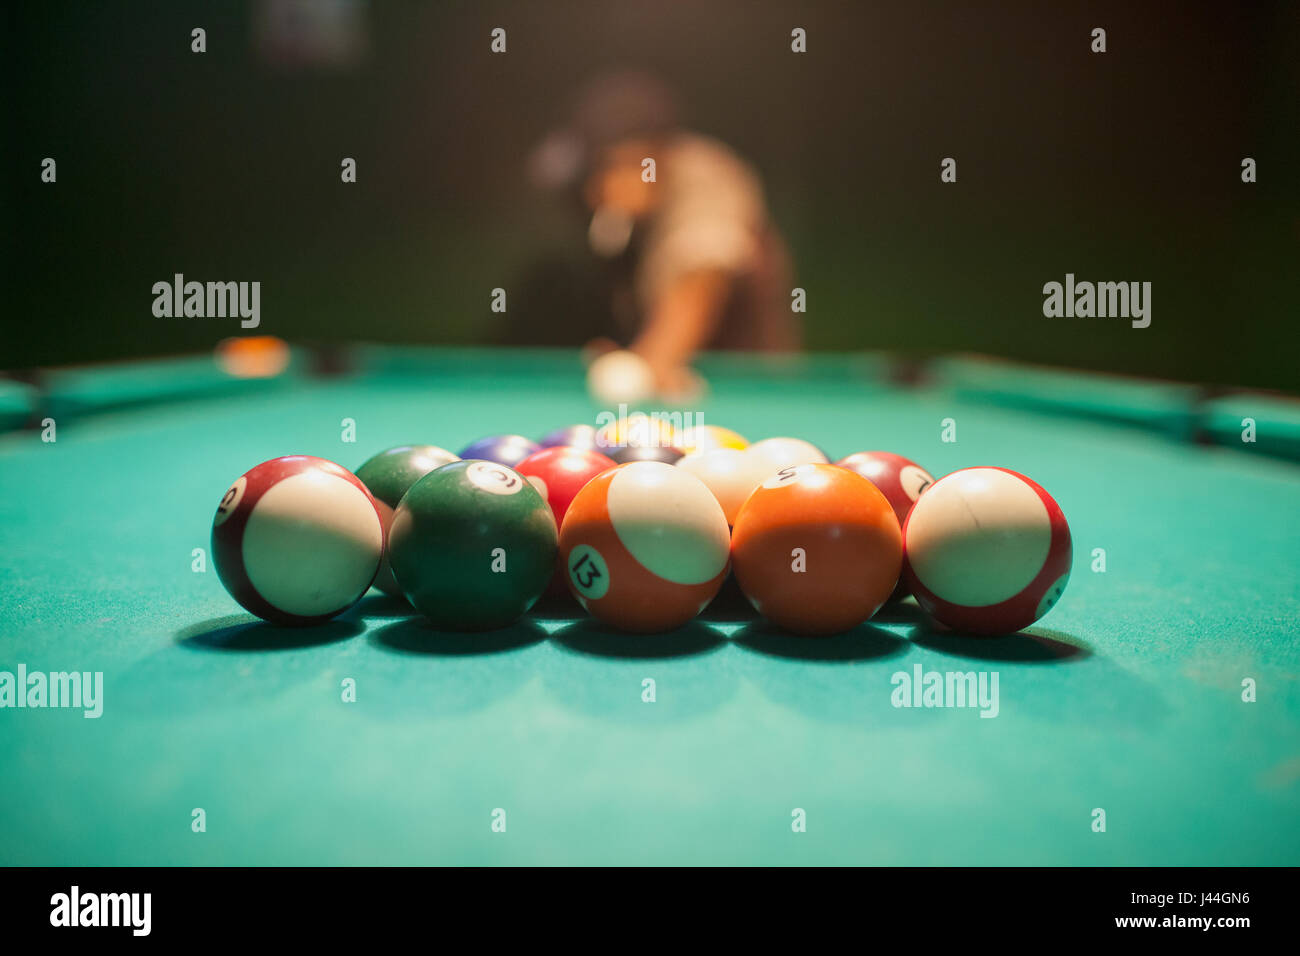 Pool balls on a pool table. Stock Photo